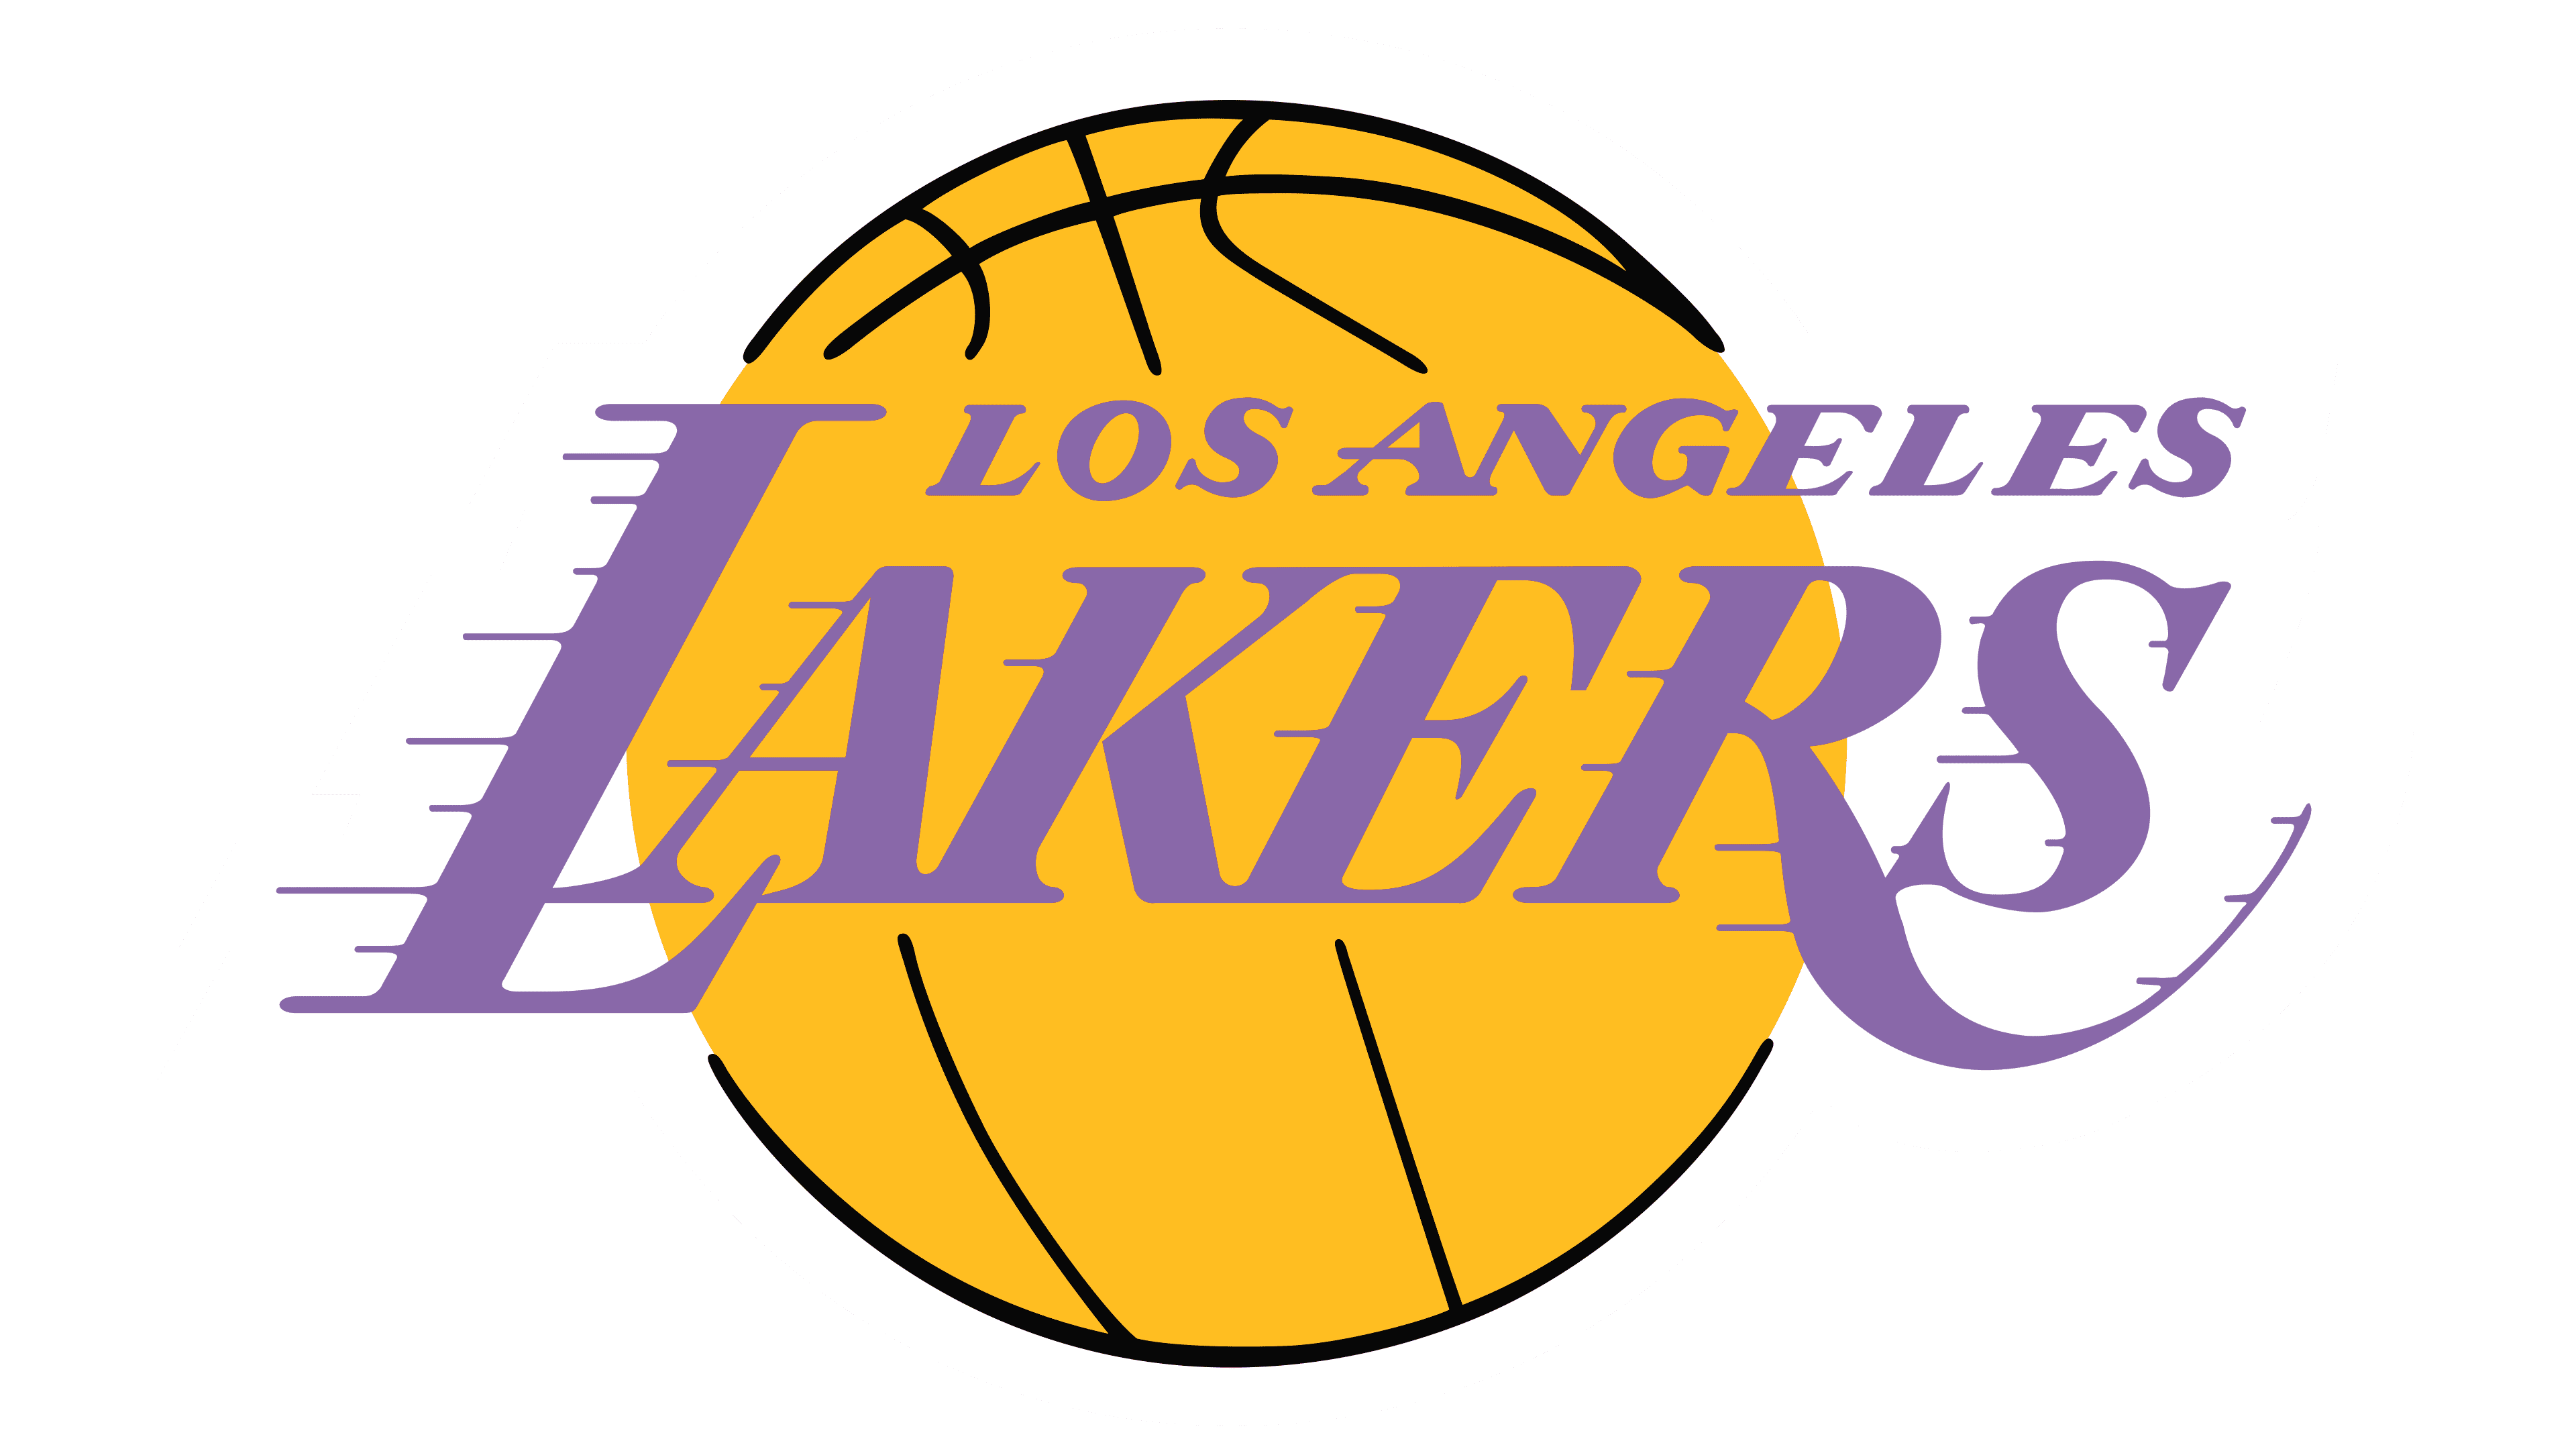 Los-Angeles-Lakers-Logo-1977-2001.png